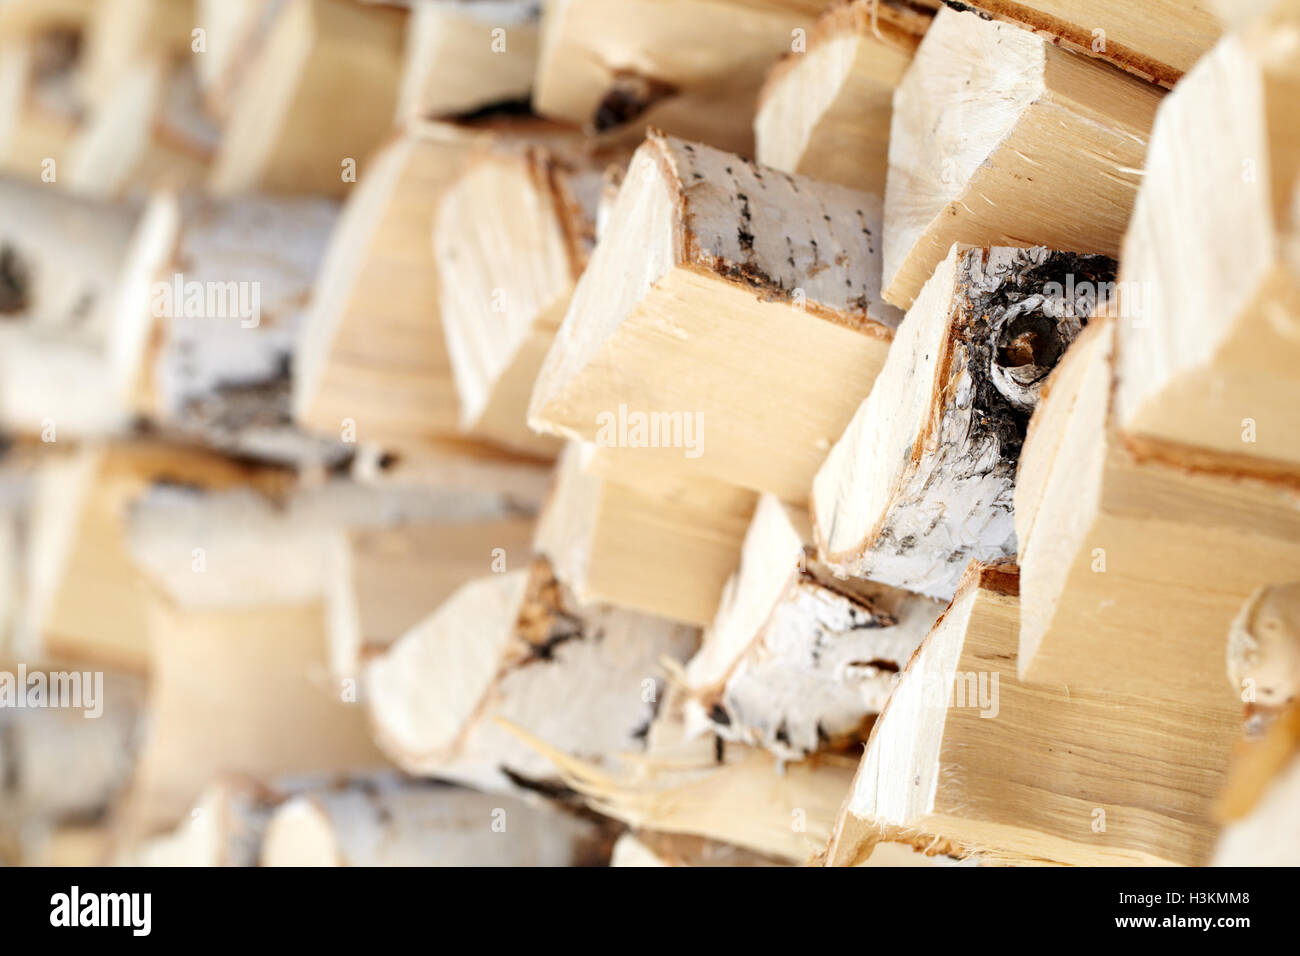 Stock of firewood Stock Photo